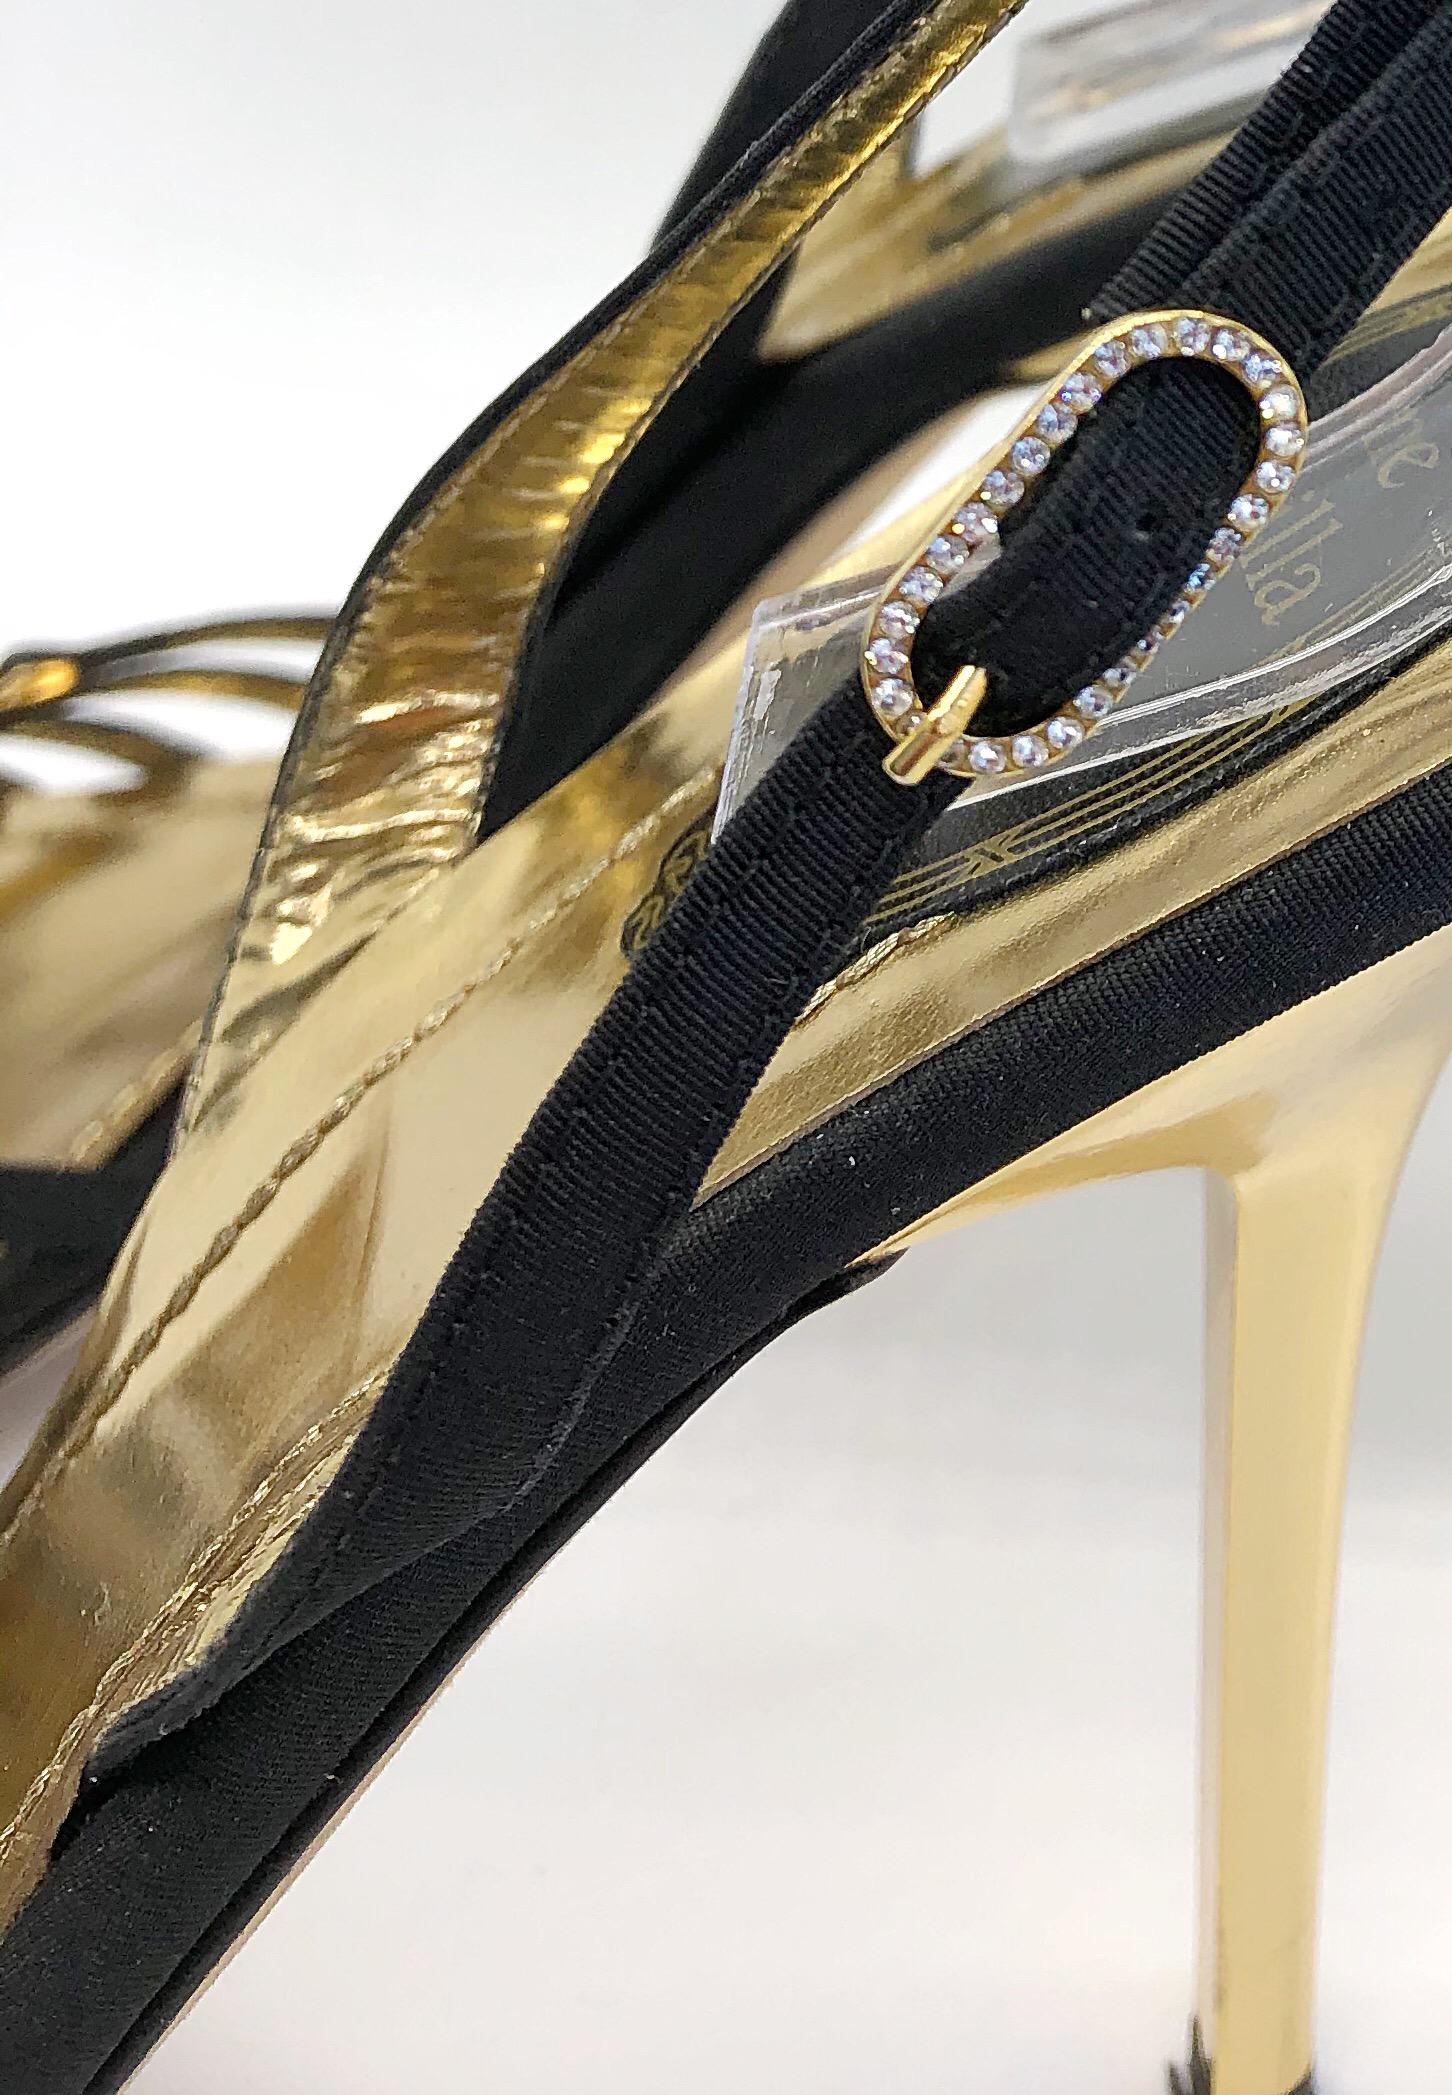 gold rhinestone shoes